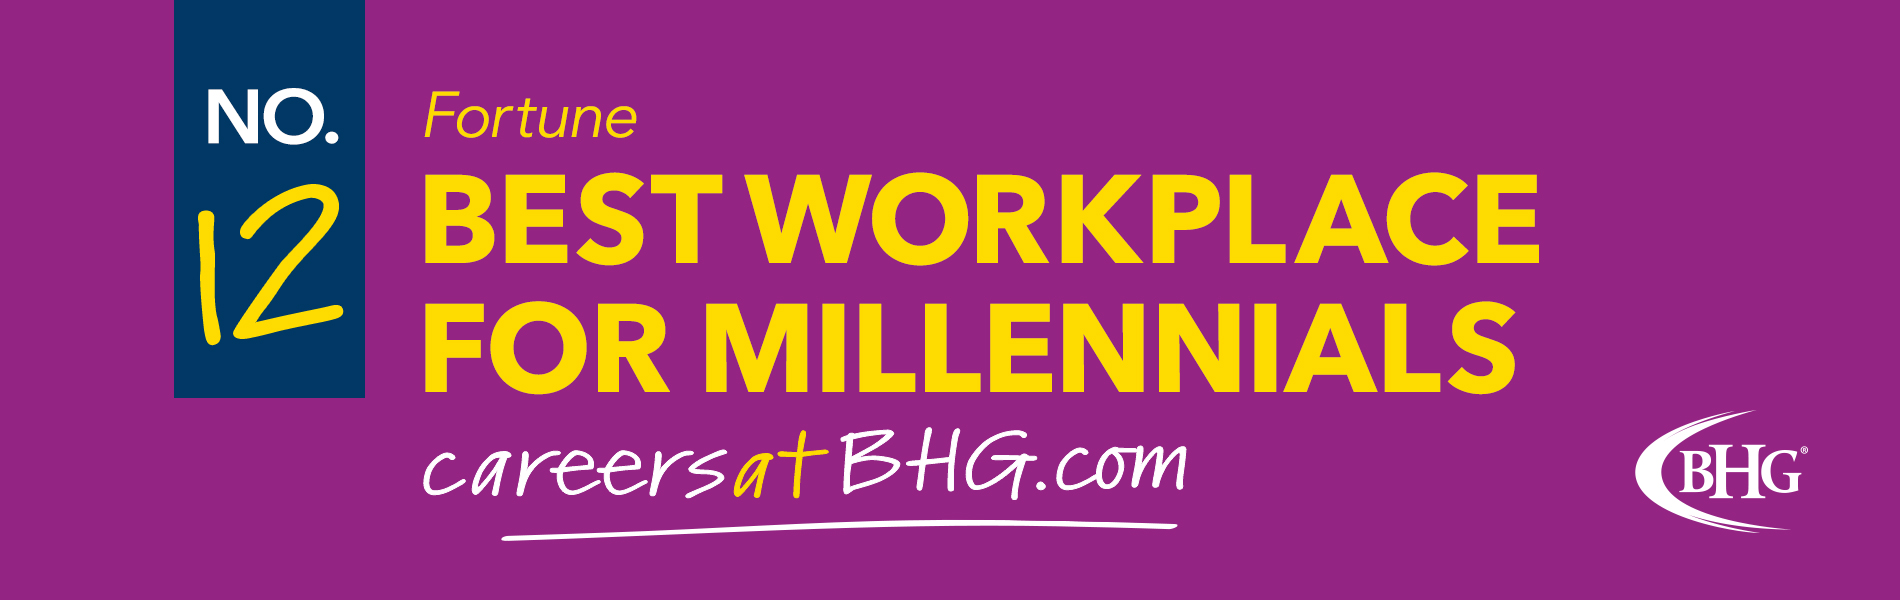 No. 12 Fortune Best Workplace for Millennials